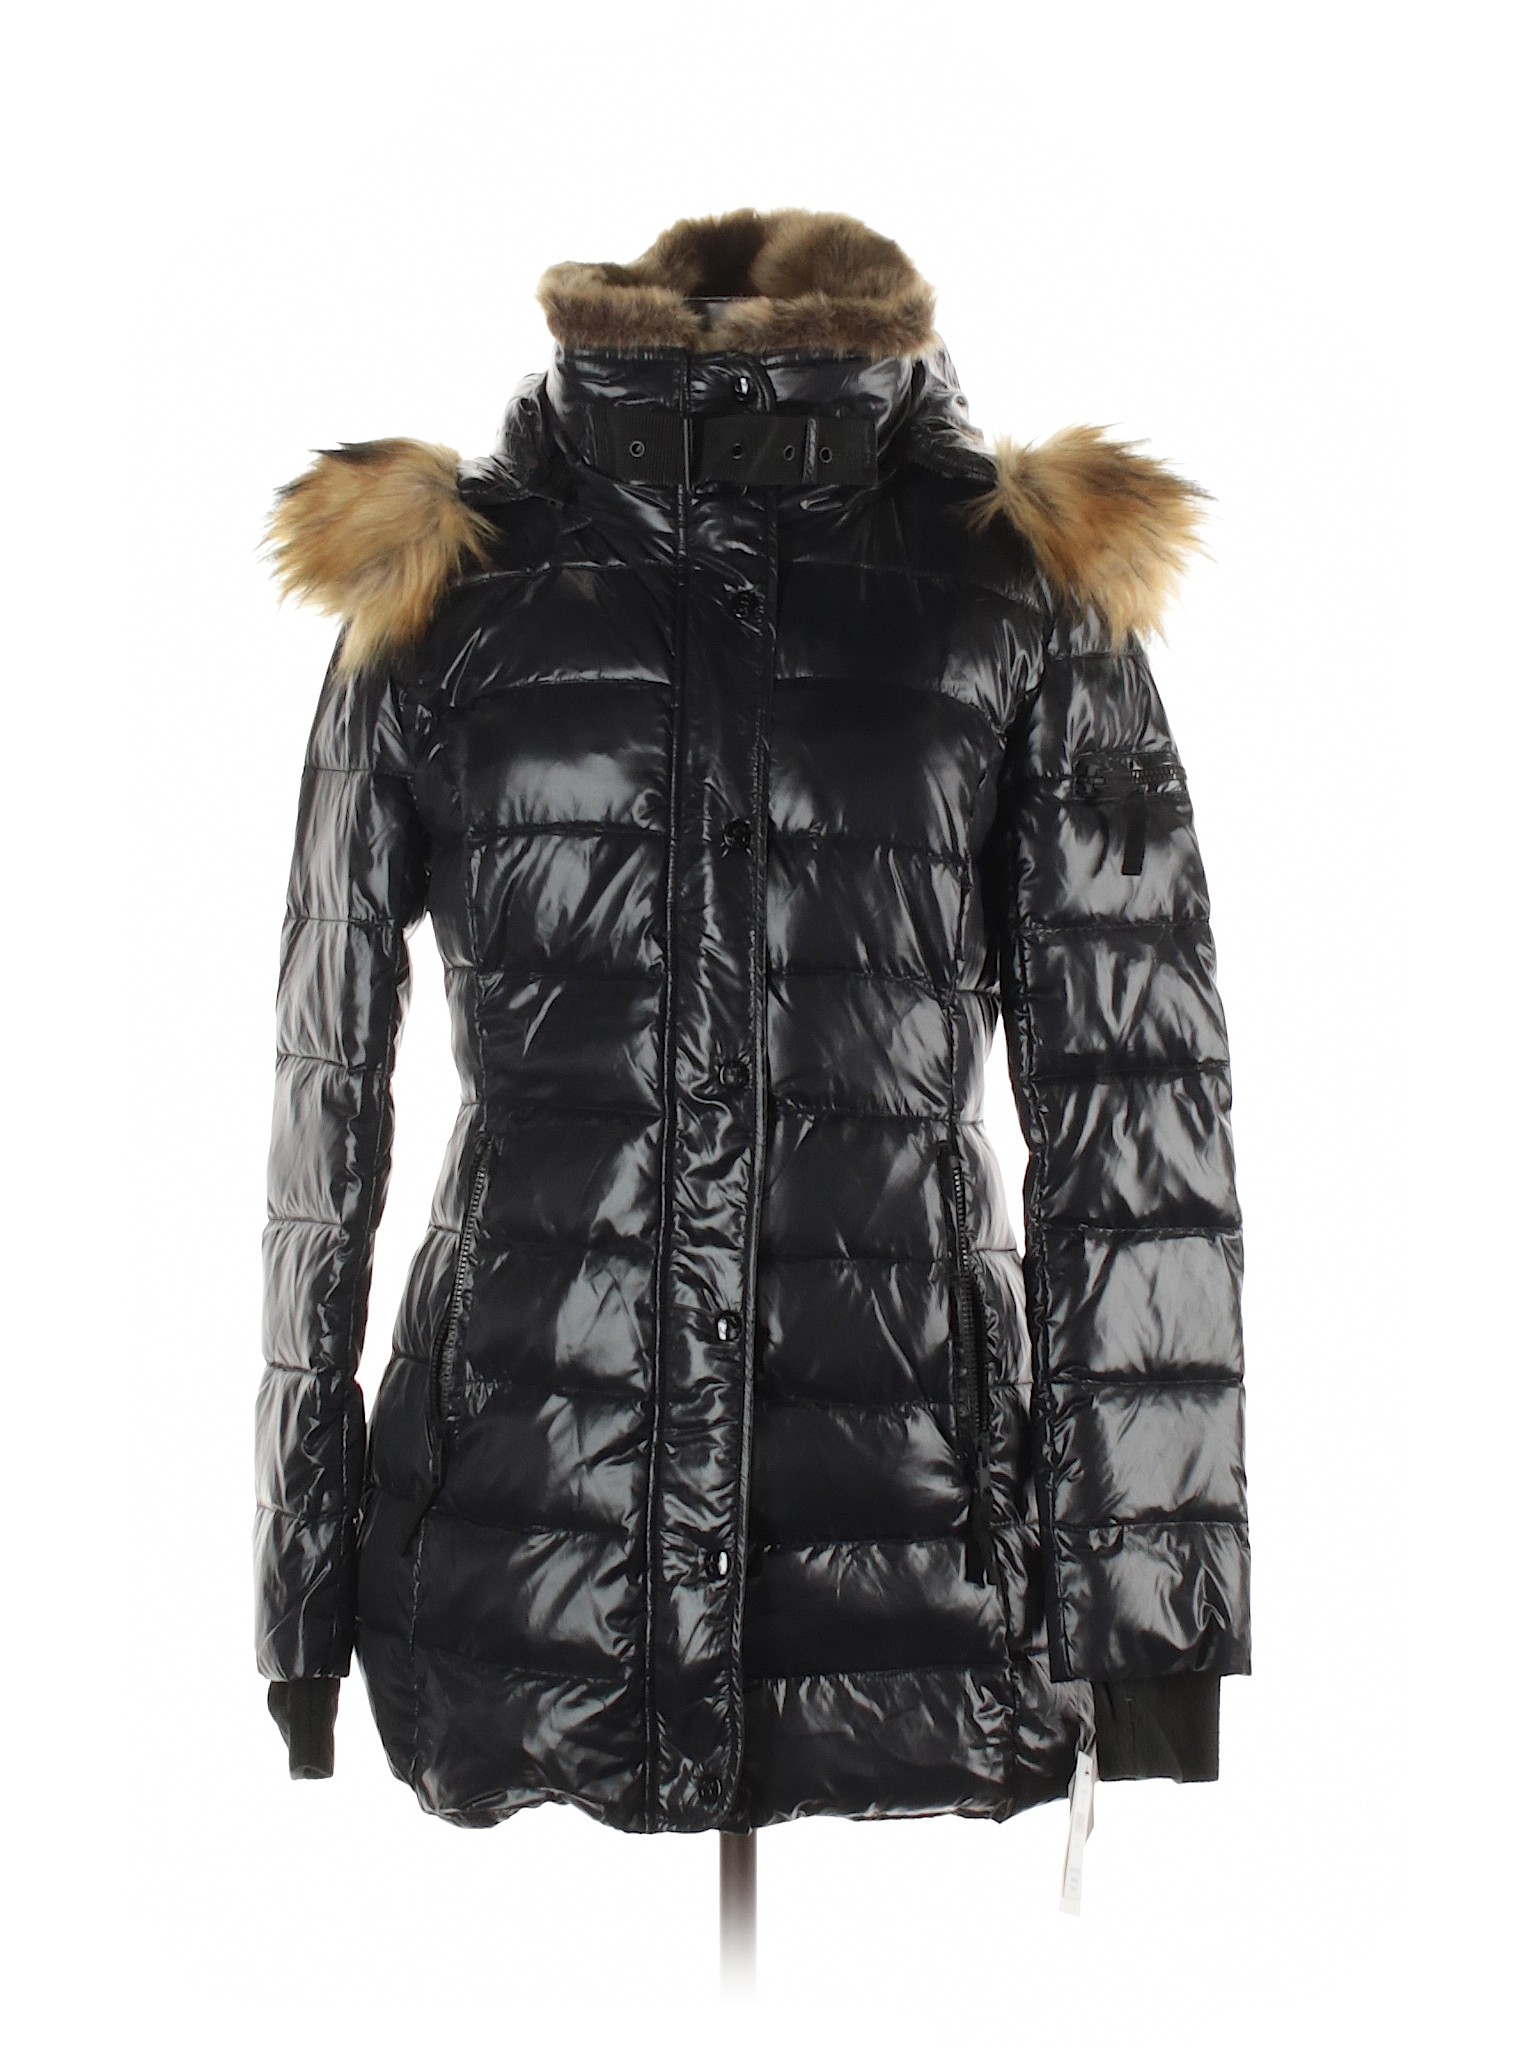 NWT S13/NYC Women Black Coat M | eBay